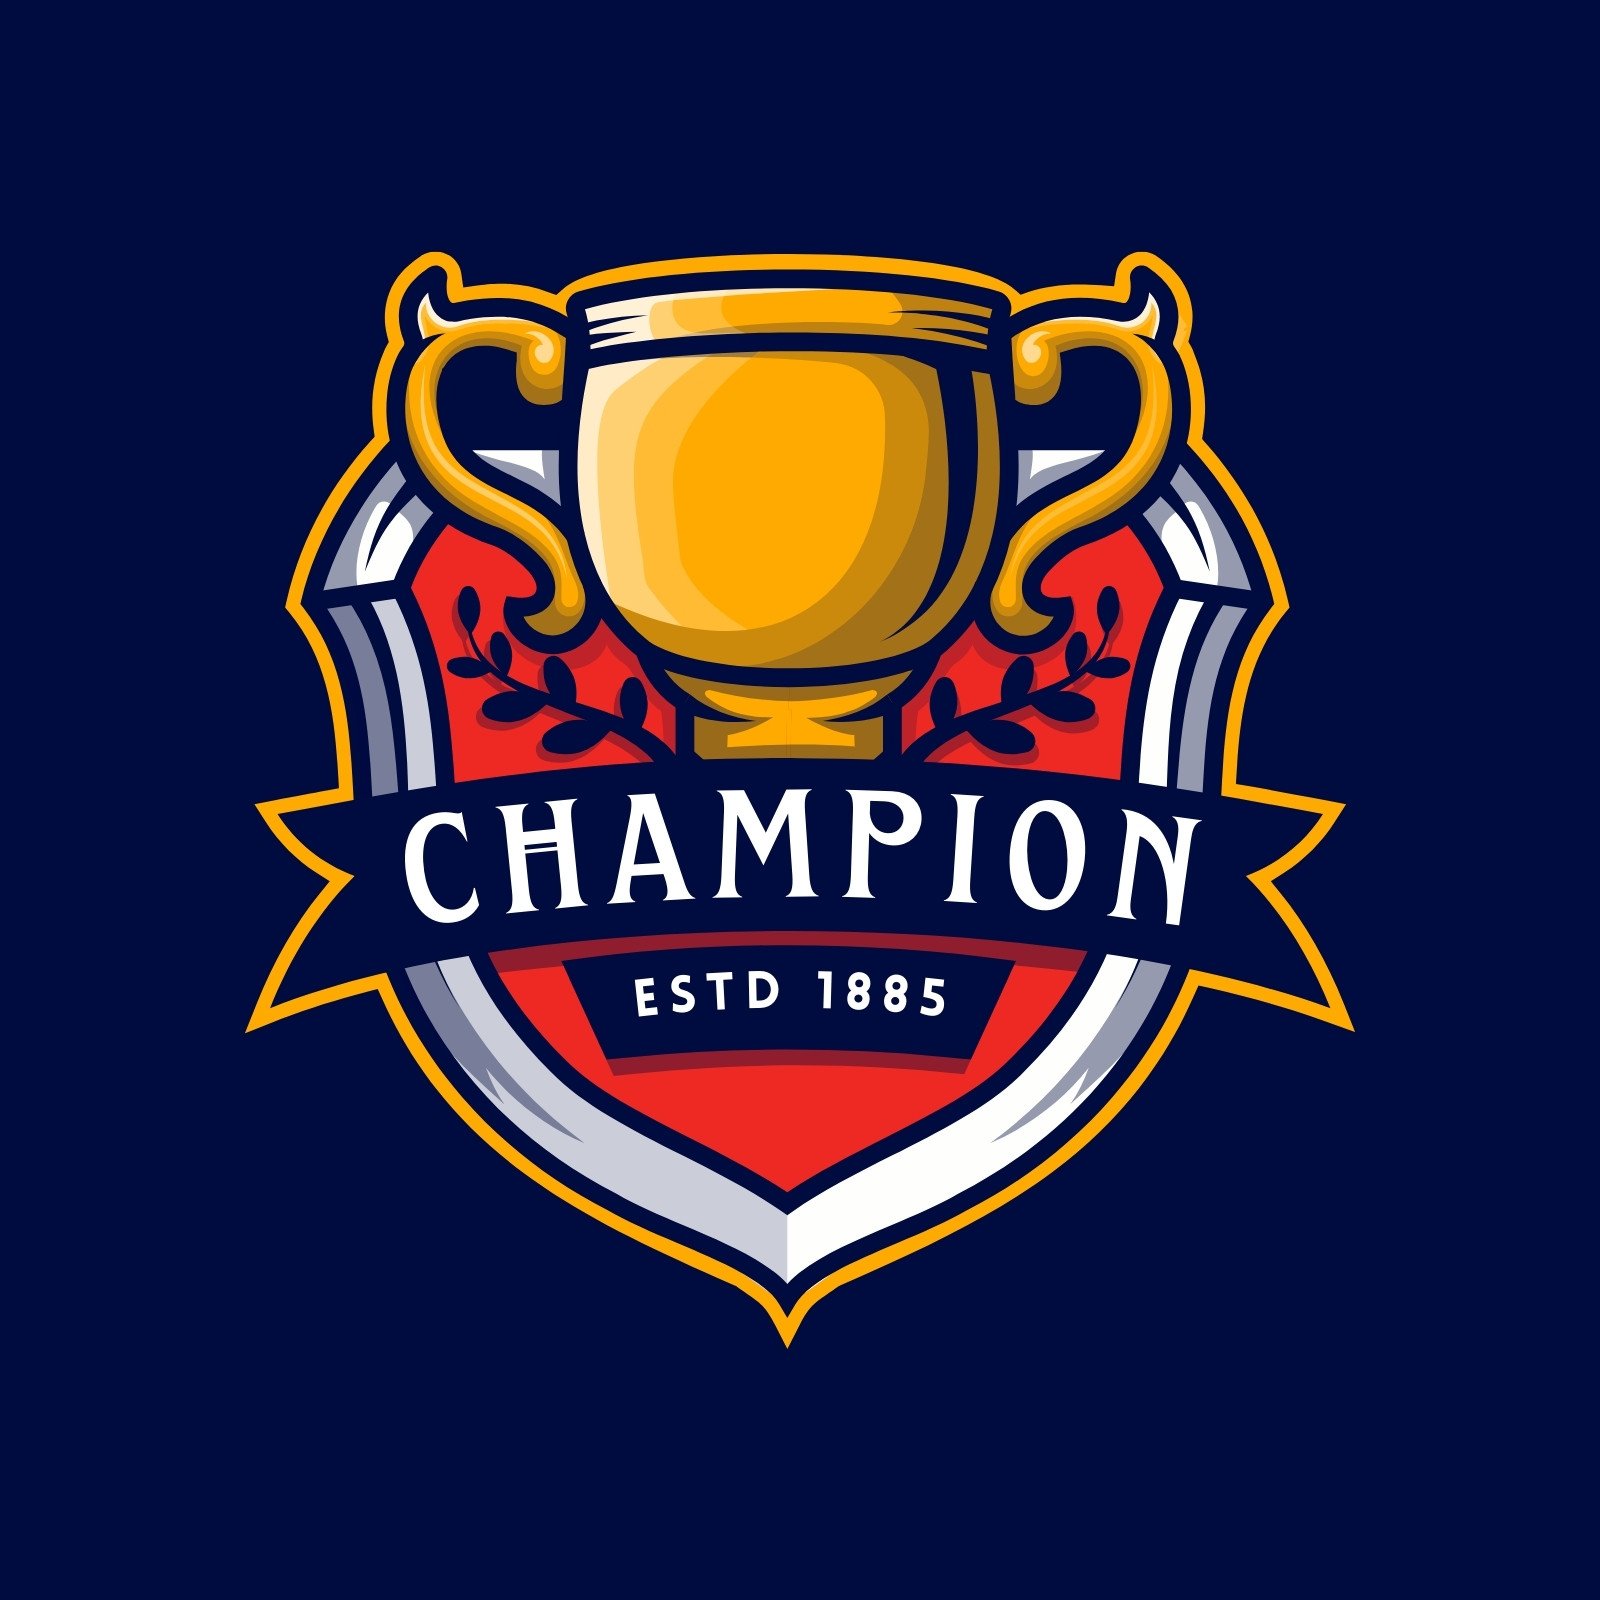 Blue and Red Modern Illustrative Champion Trophy Logo